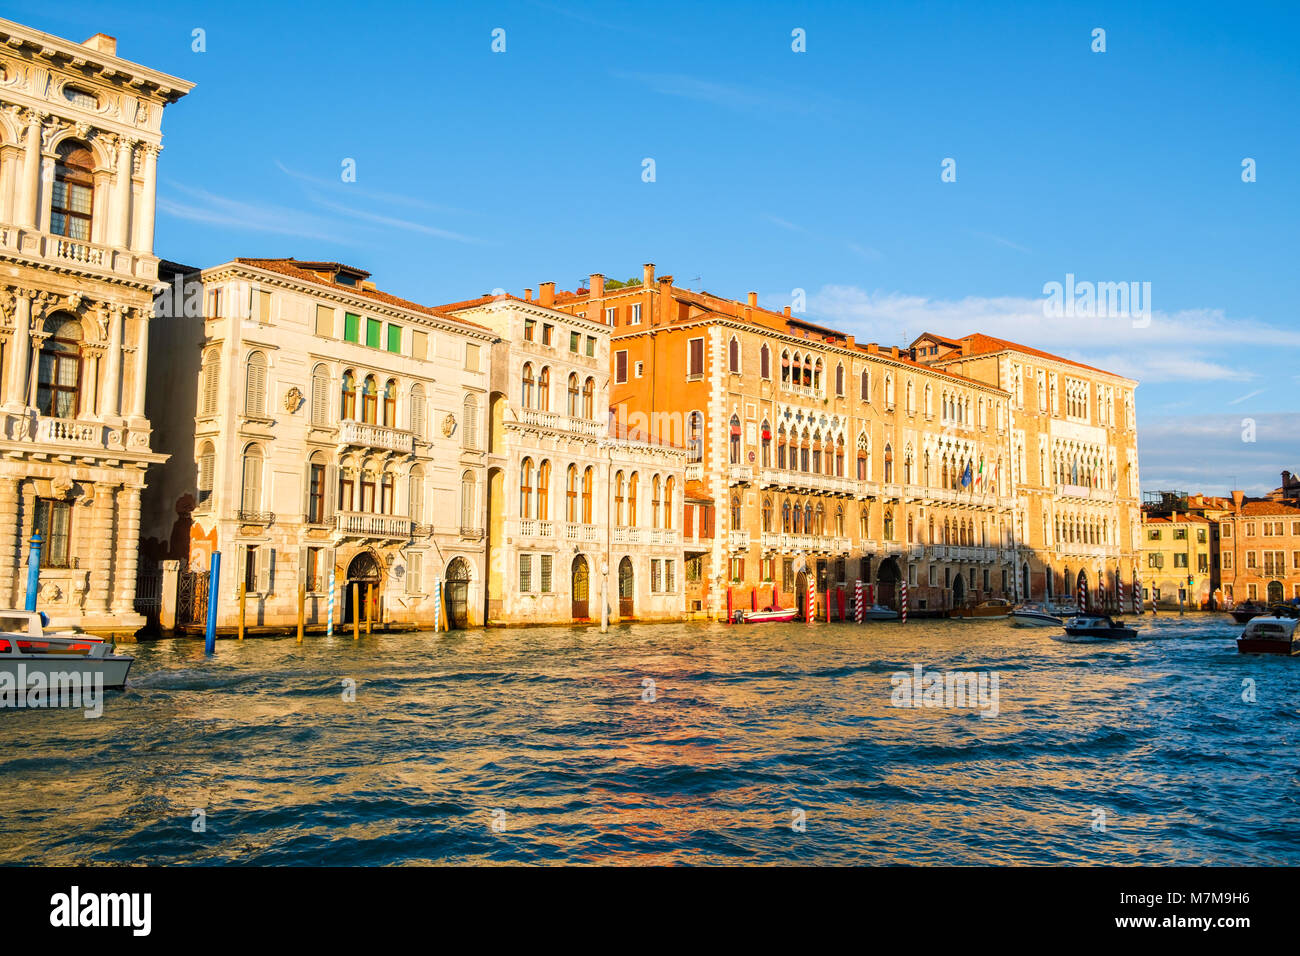 Antike Architektur traditionelles Gebäude in Canal Grande, Venedig. Italien Stockfoto